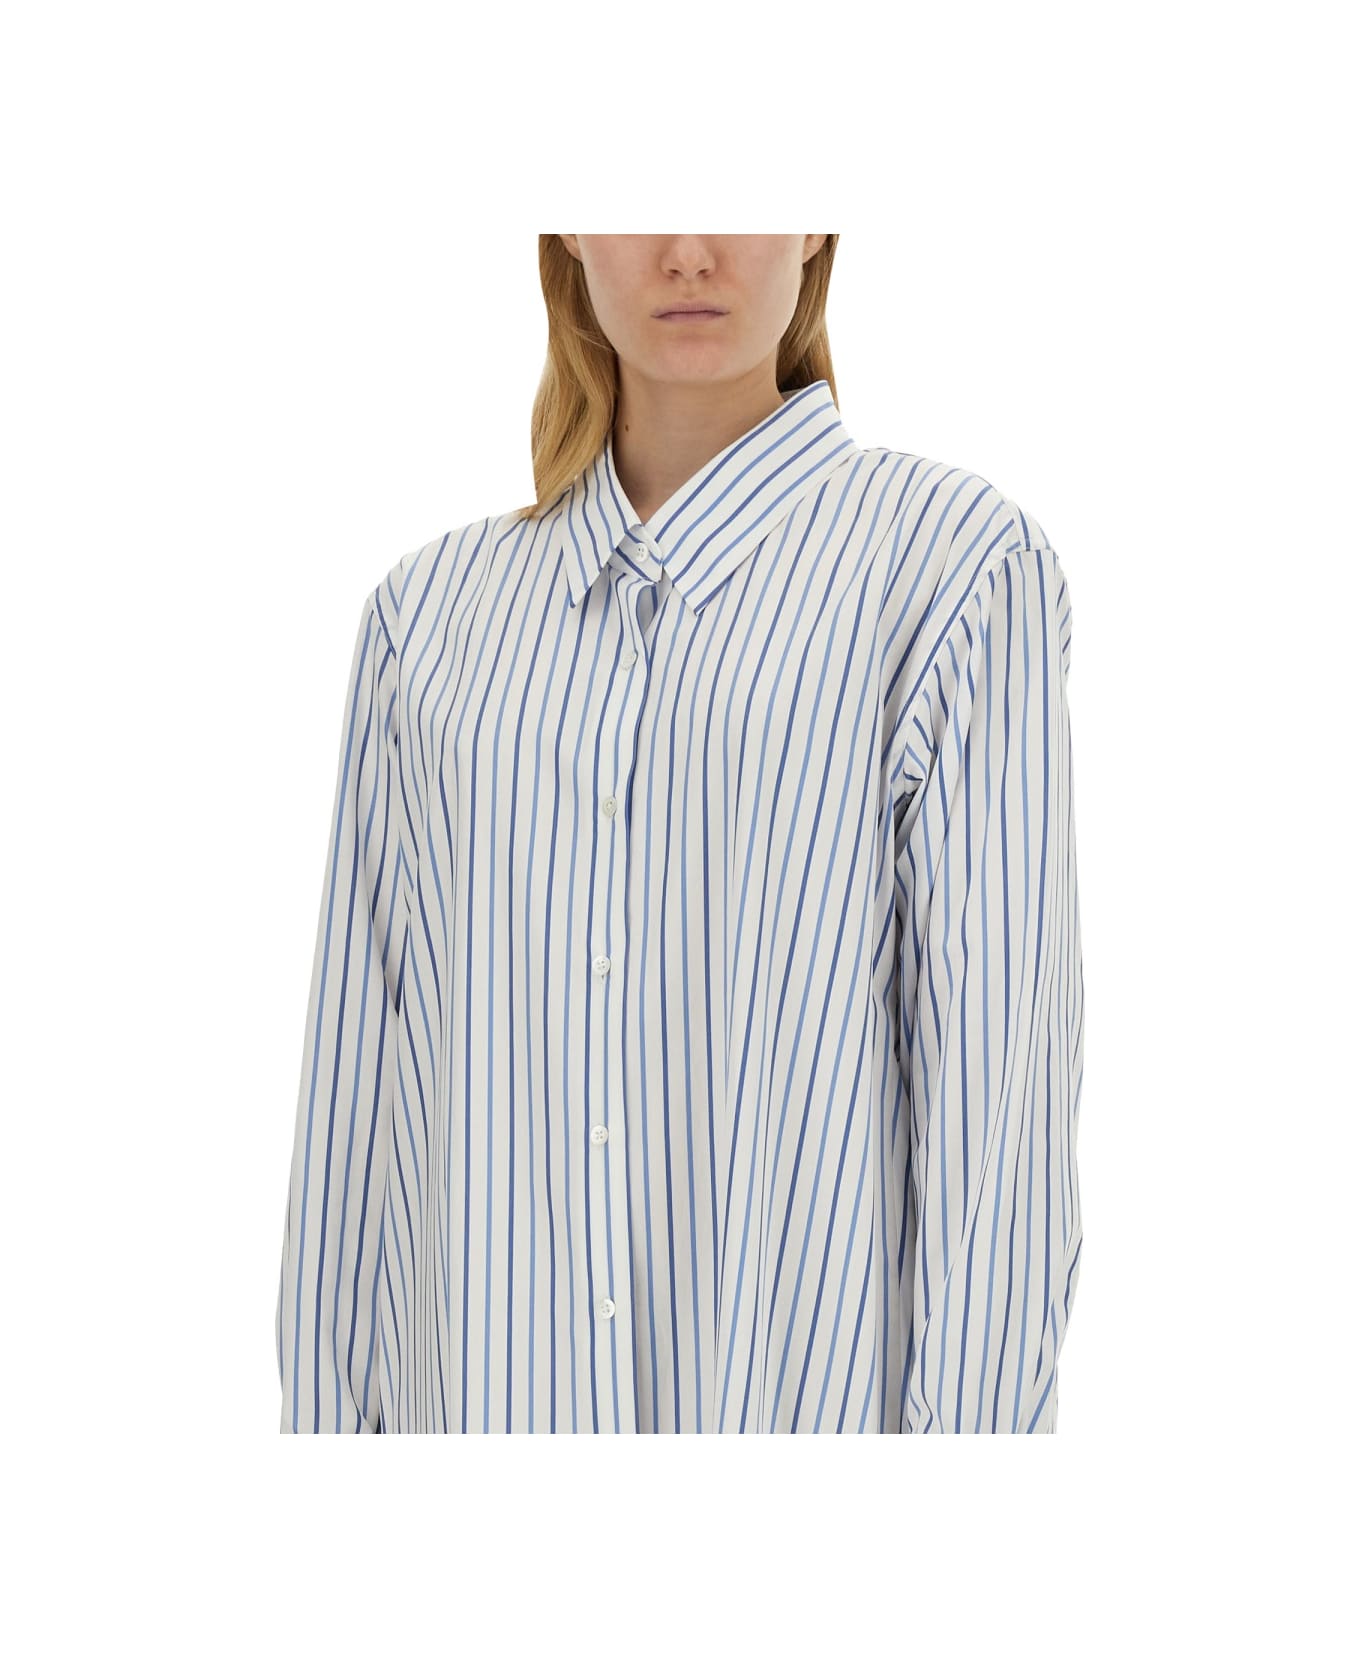 Dries Van Noten Shirt With Stripe Pattern - MULTICOLOUR シャツ